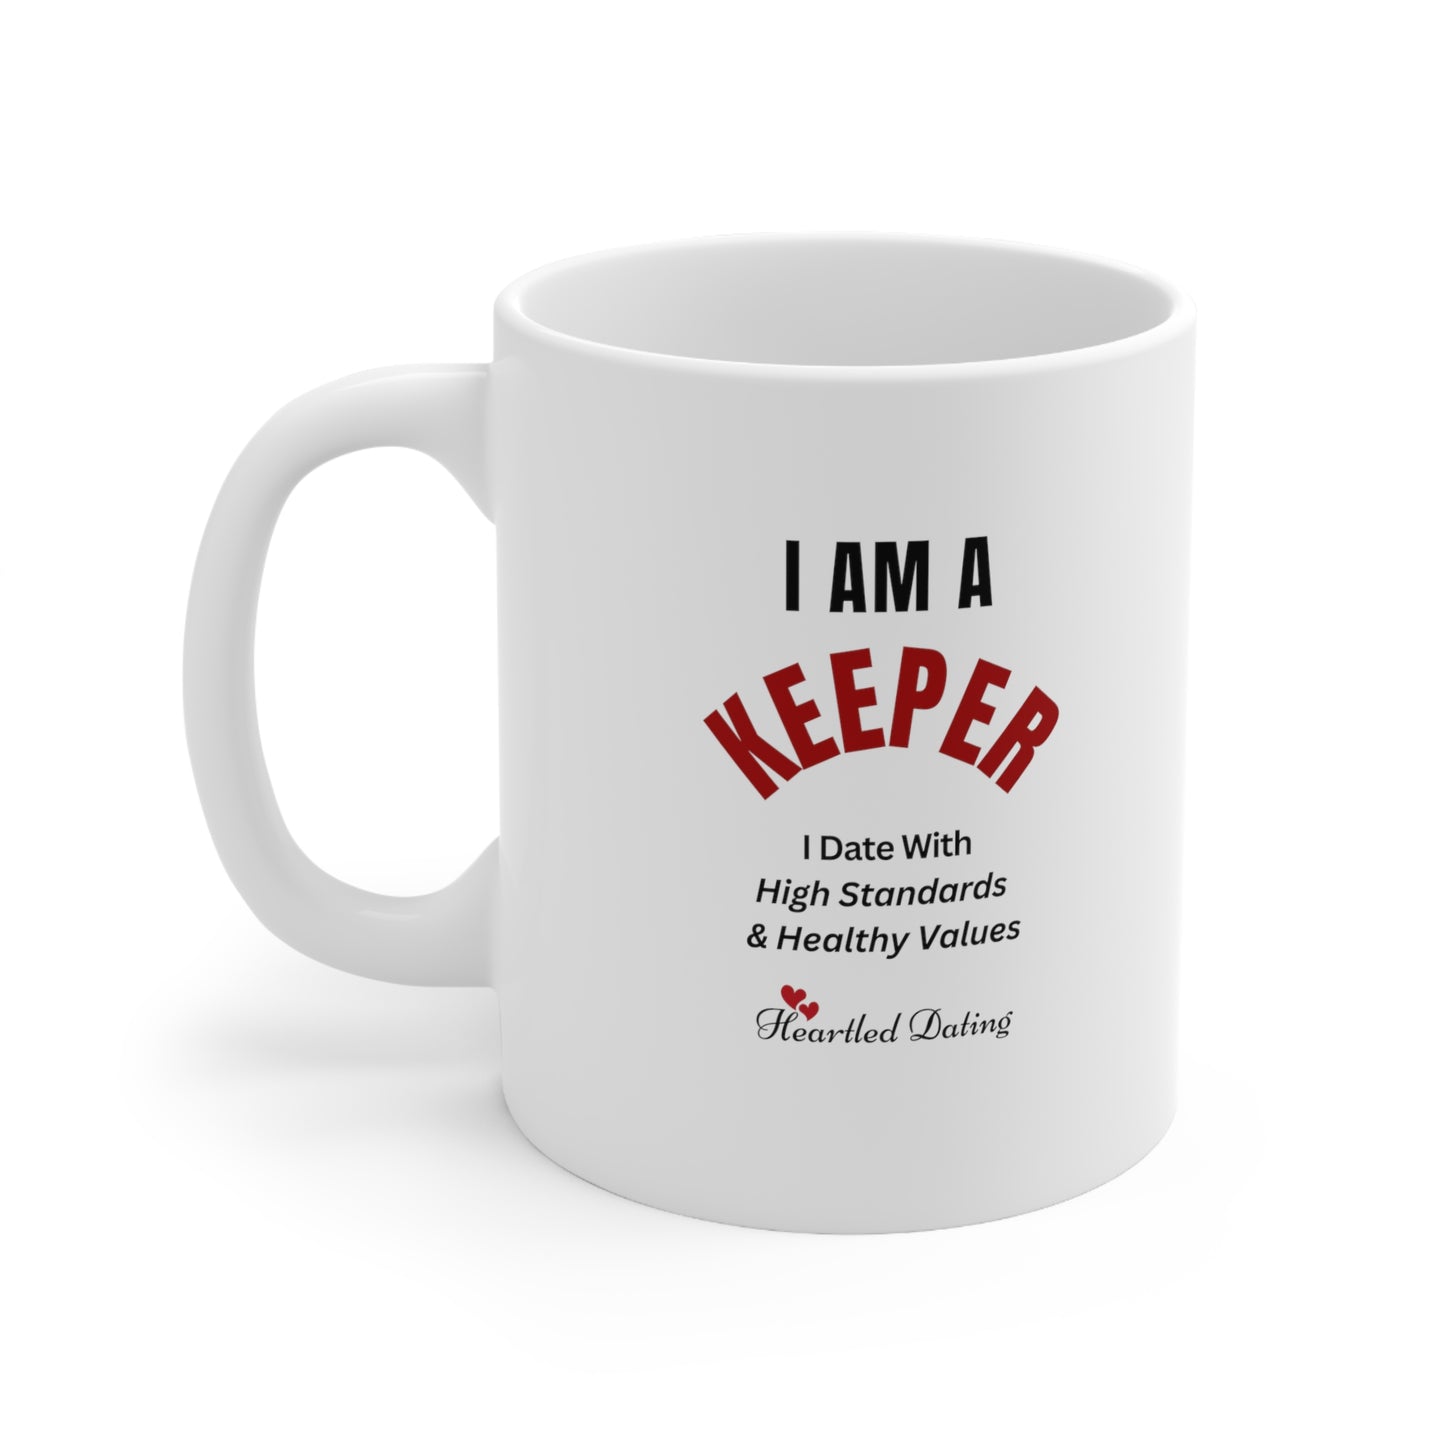 I AM A KEEPER - Ceramic Mug 11oz